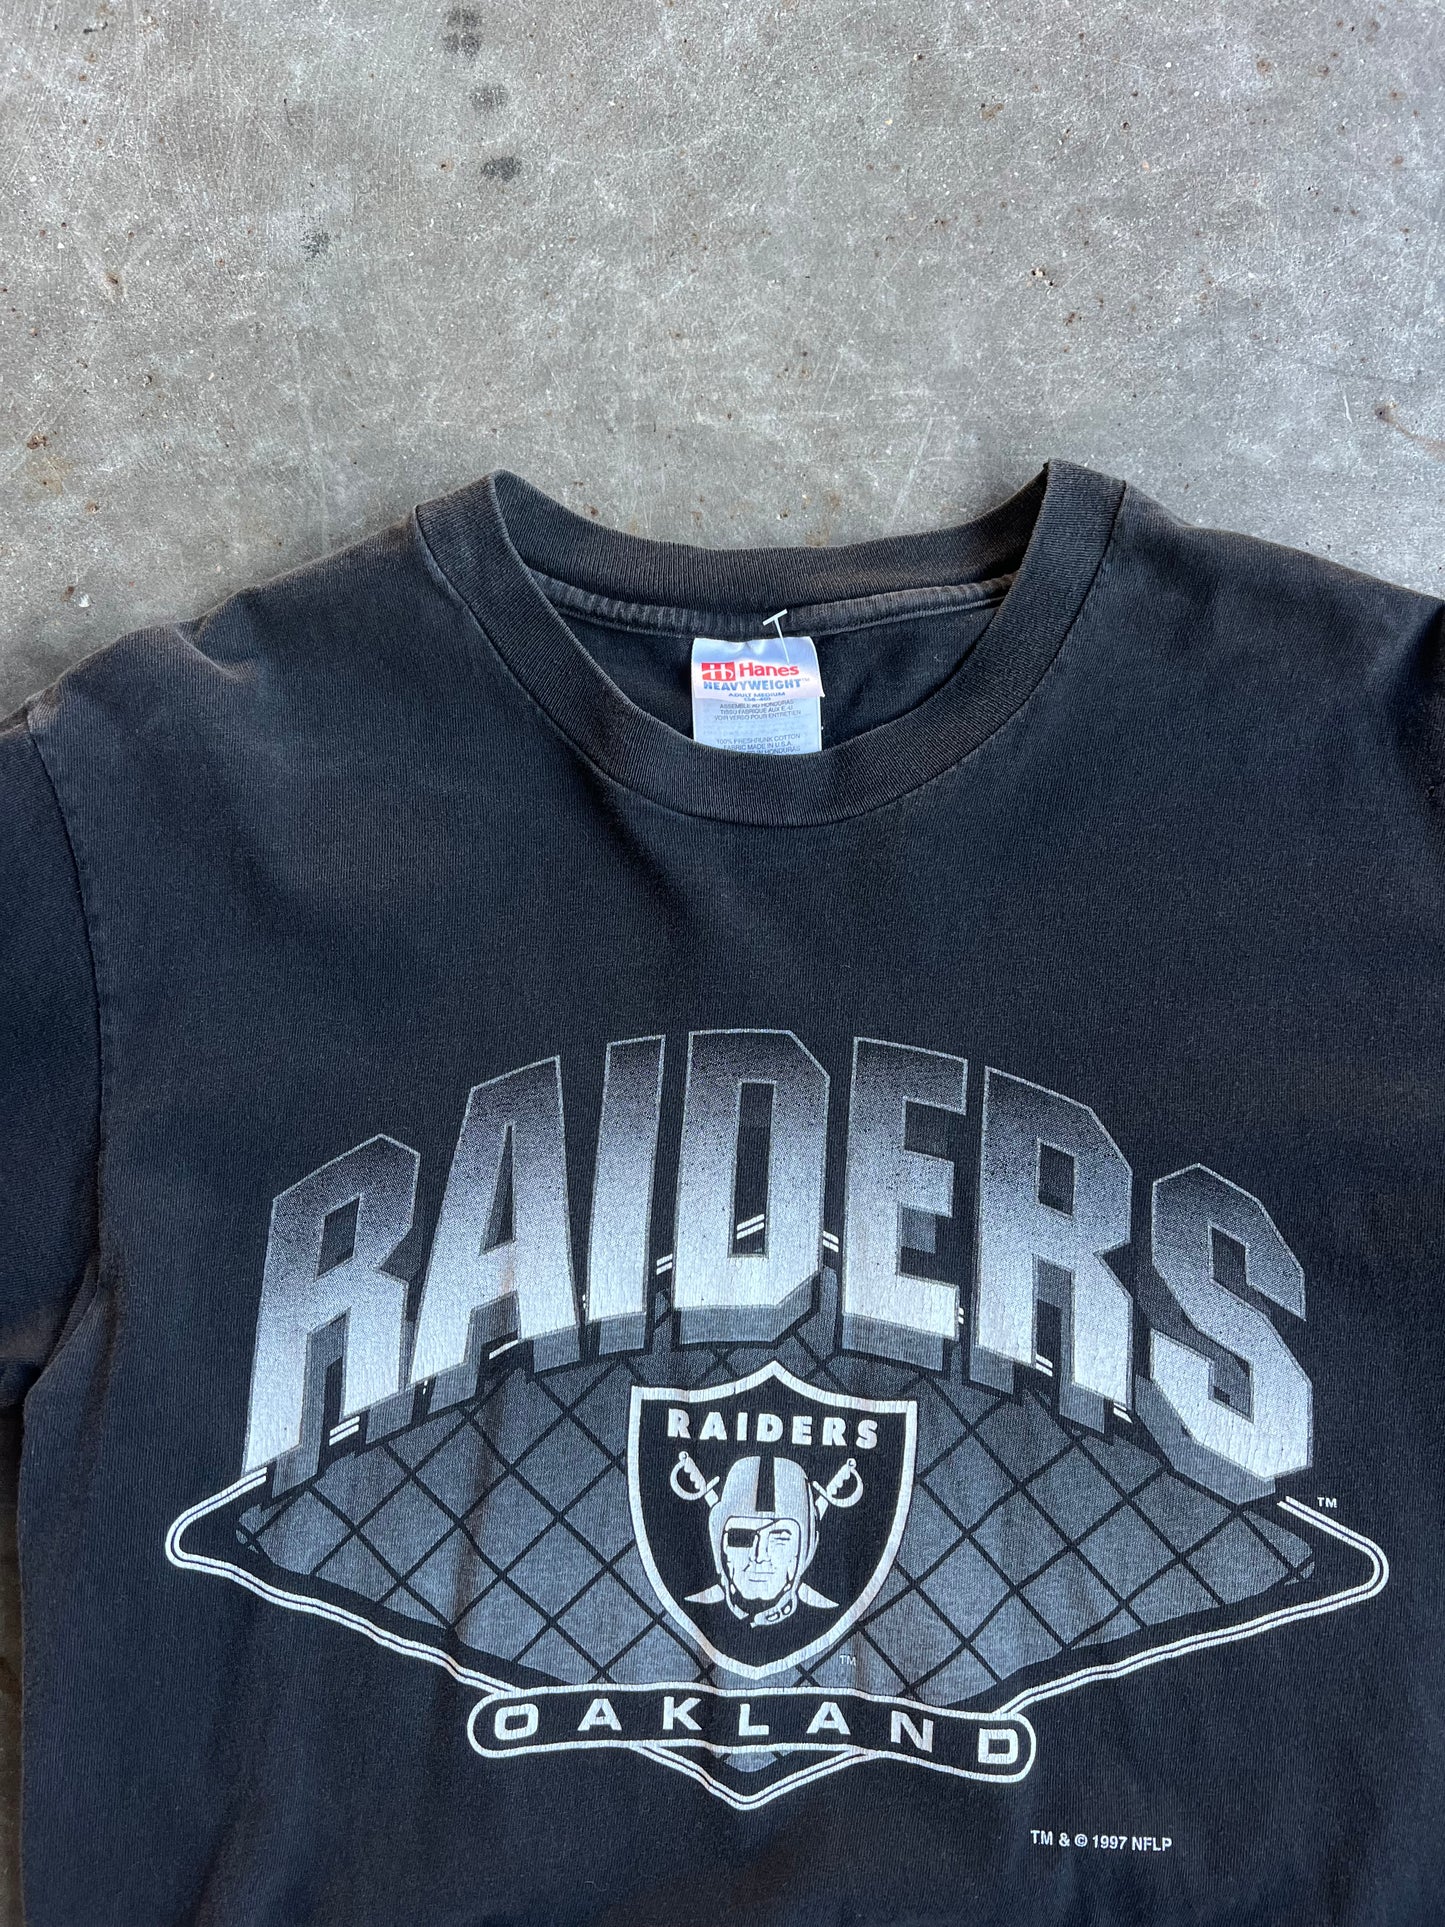 Vintage Oakland Raiders Shirt - M